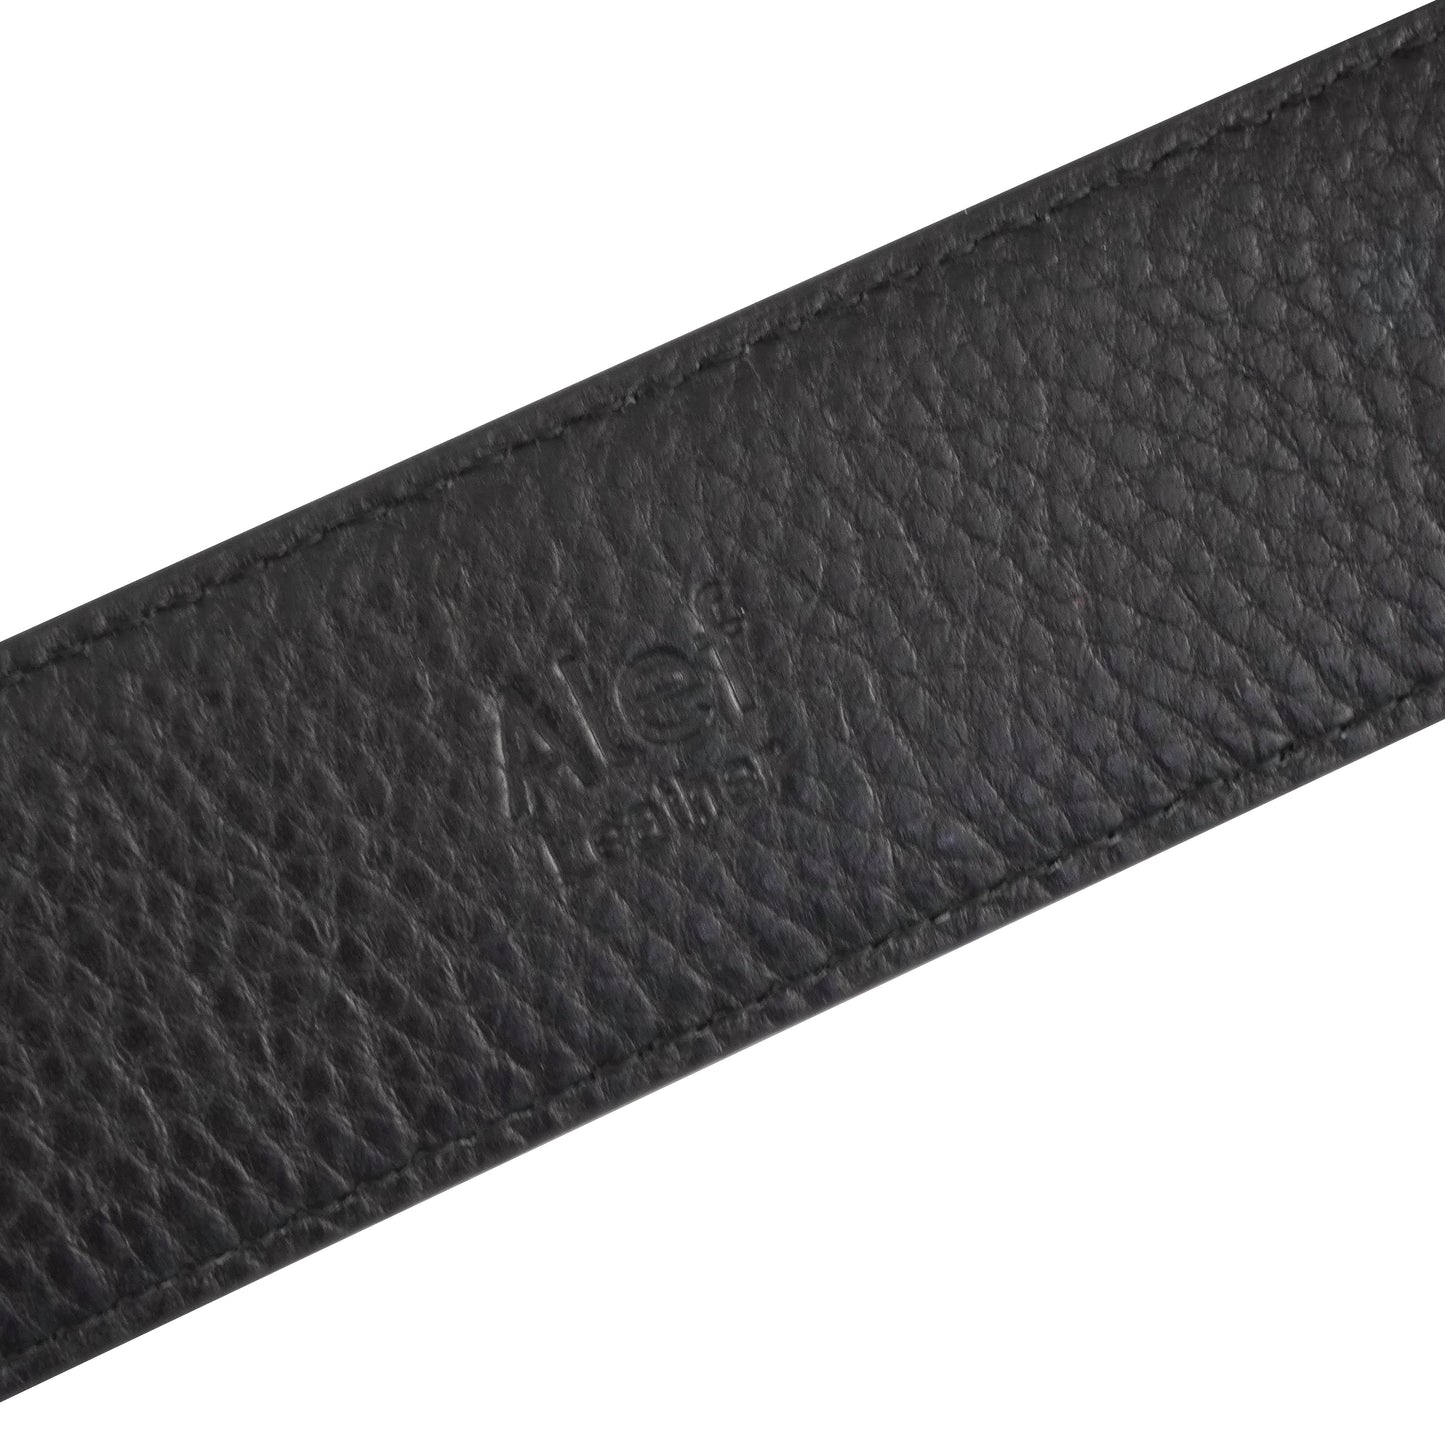 Alef Miami Auto-Lock Solid Buckle 35mm Men's Leather Belt (Black)